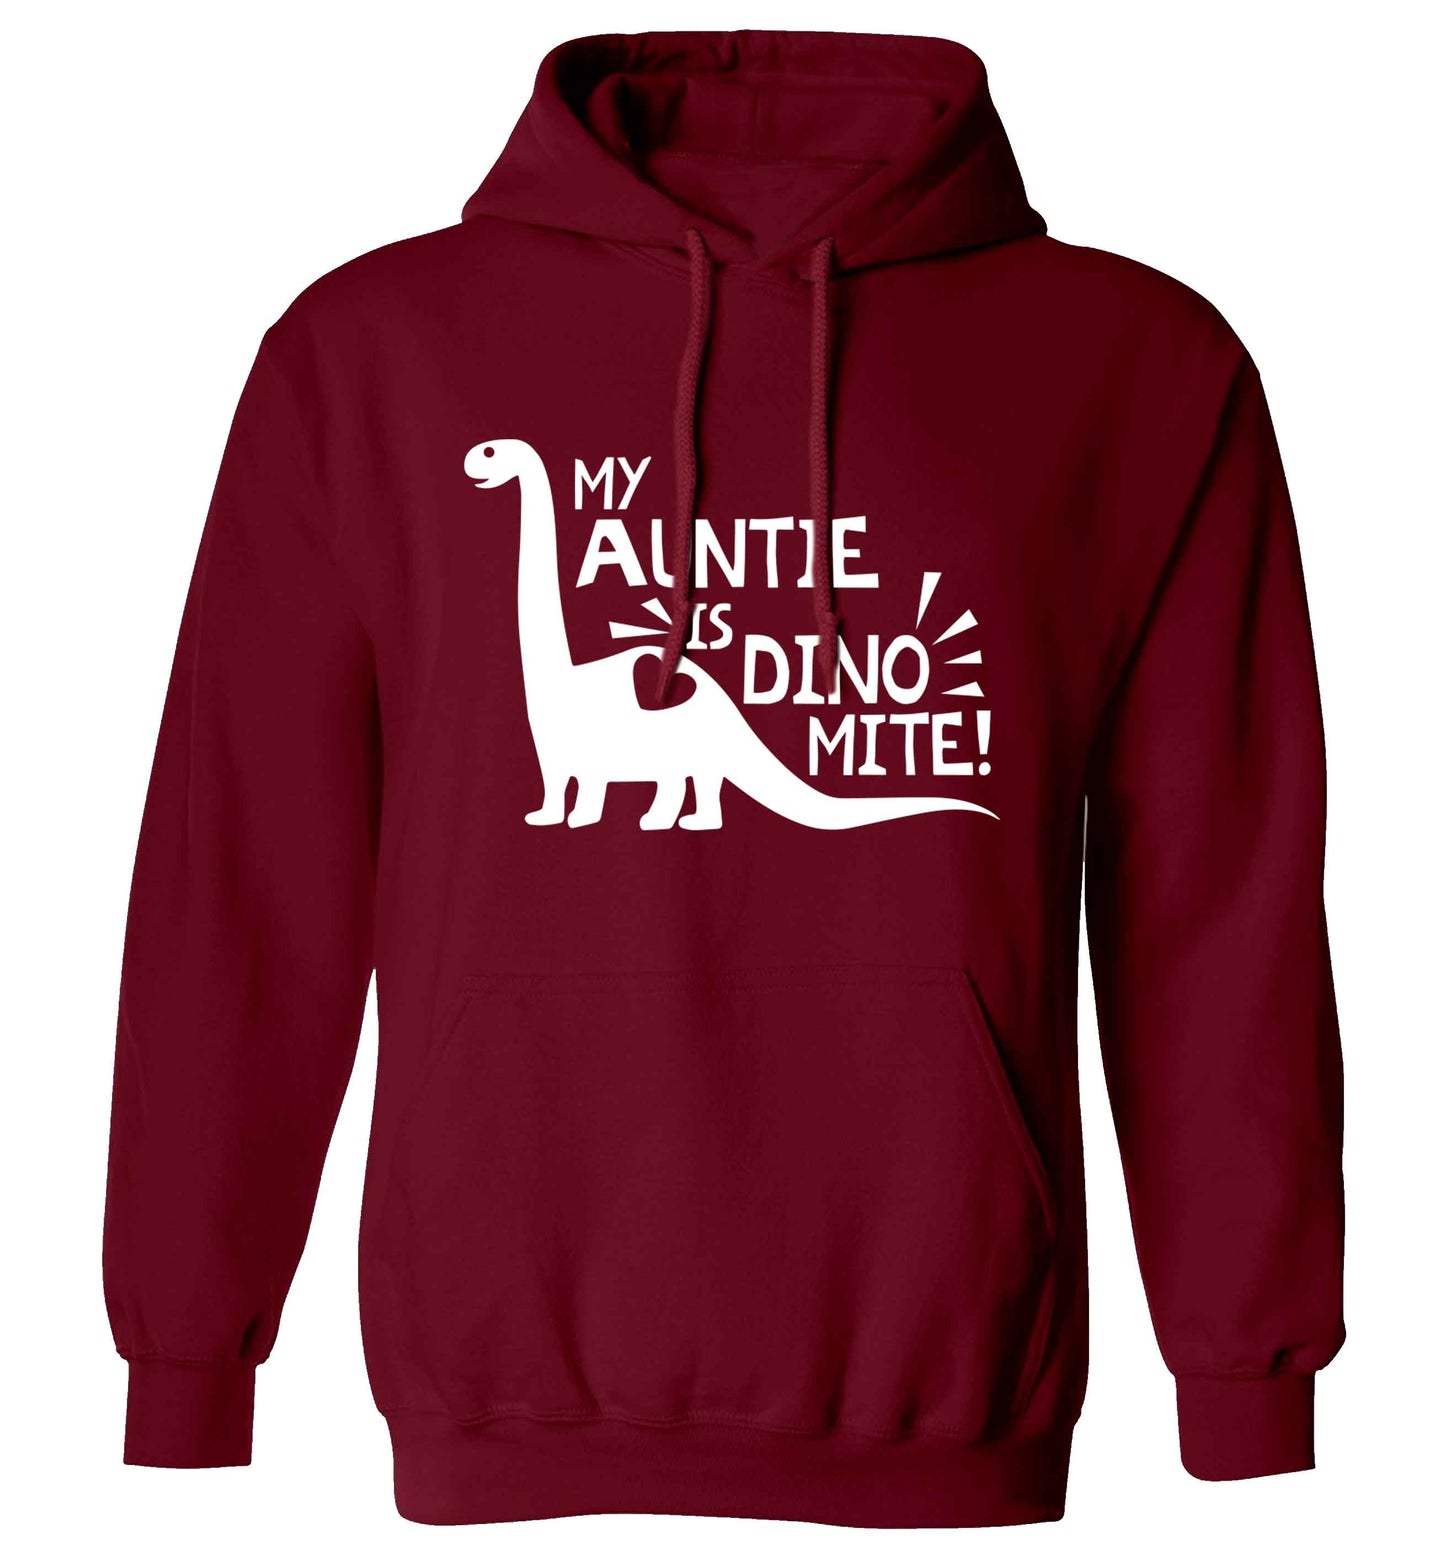 My auntie is dinomite! adults unisex maroon hoodie 2XL